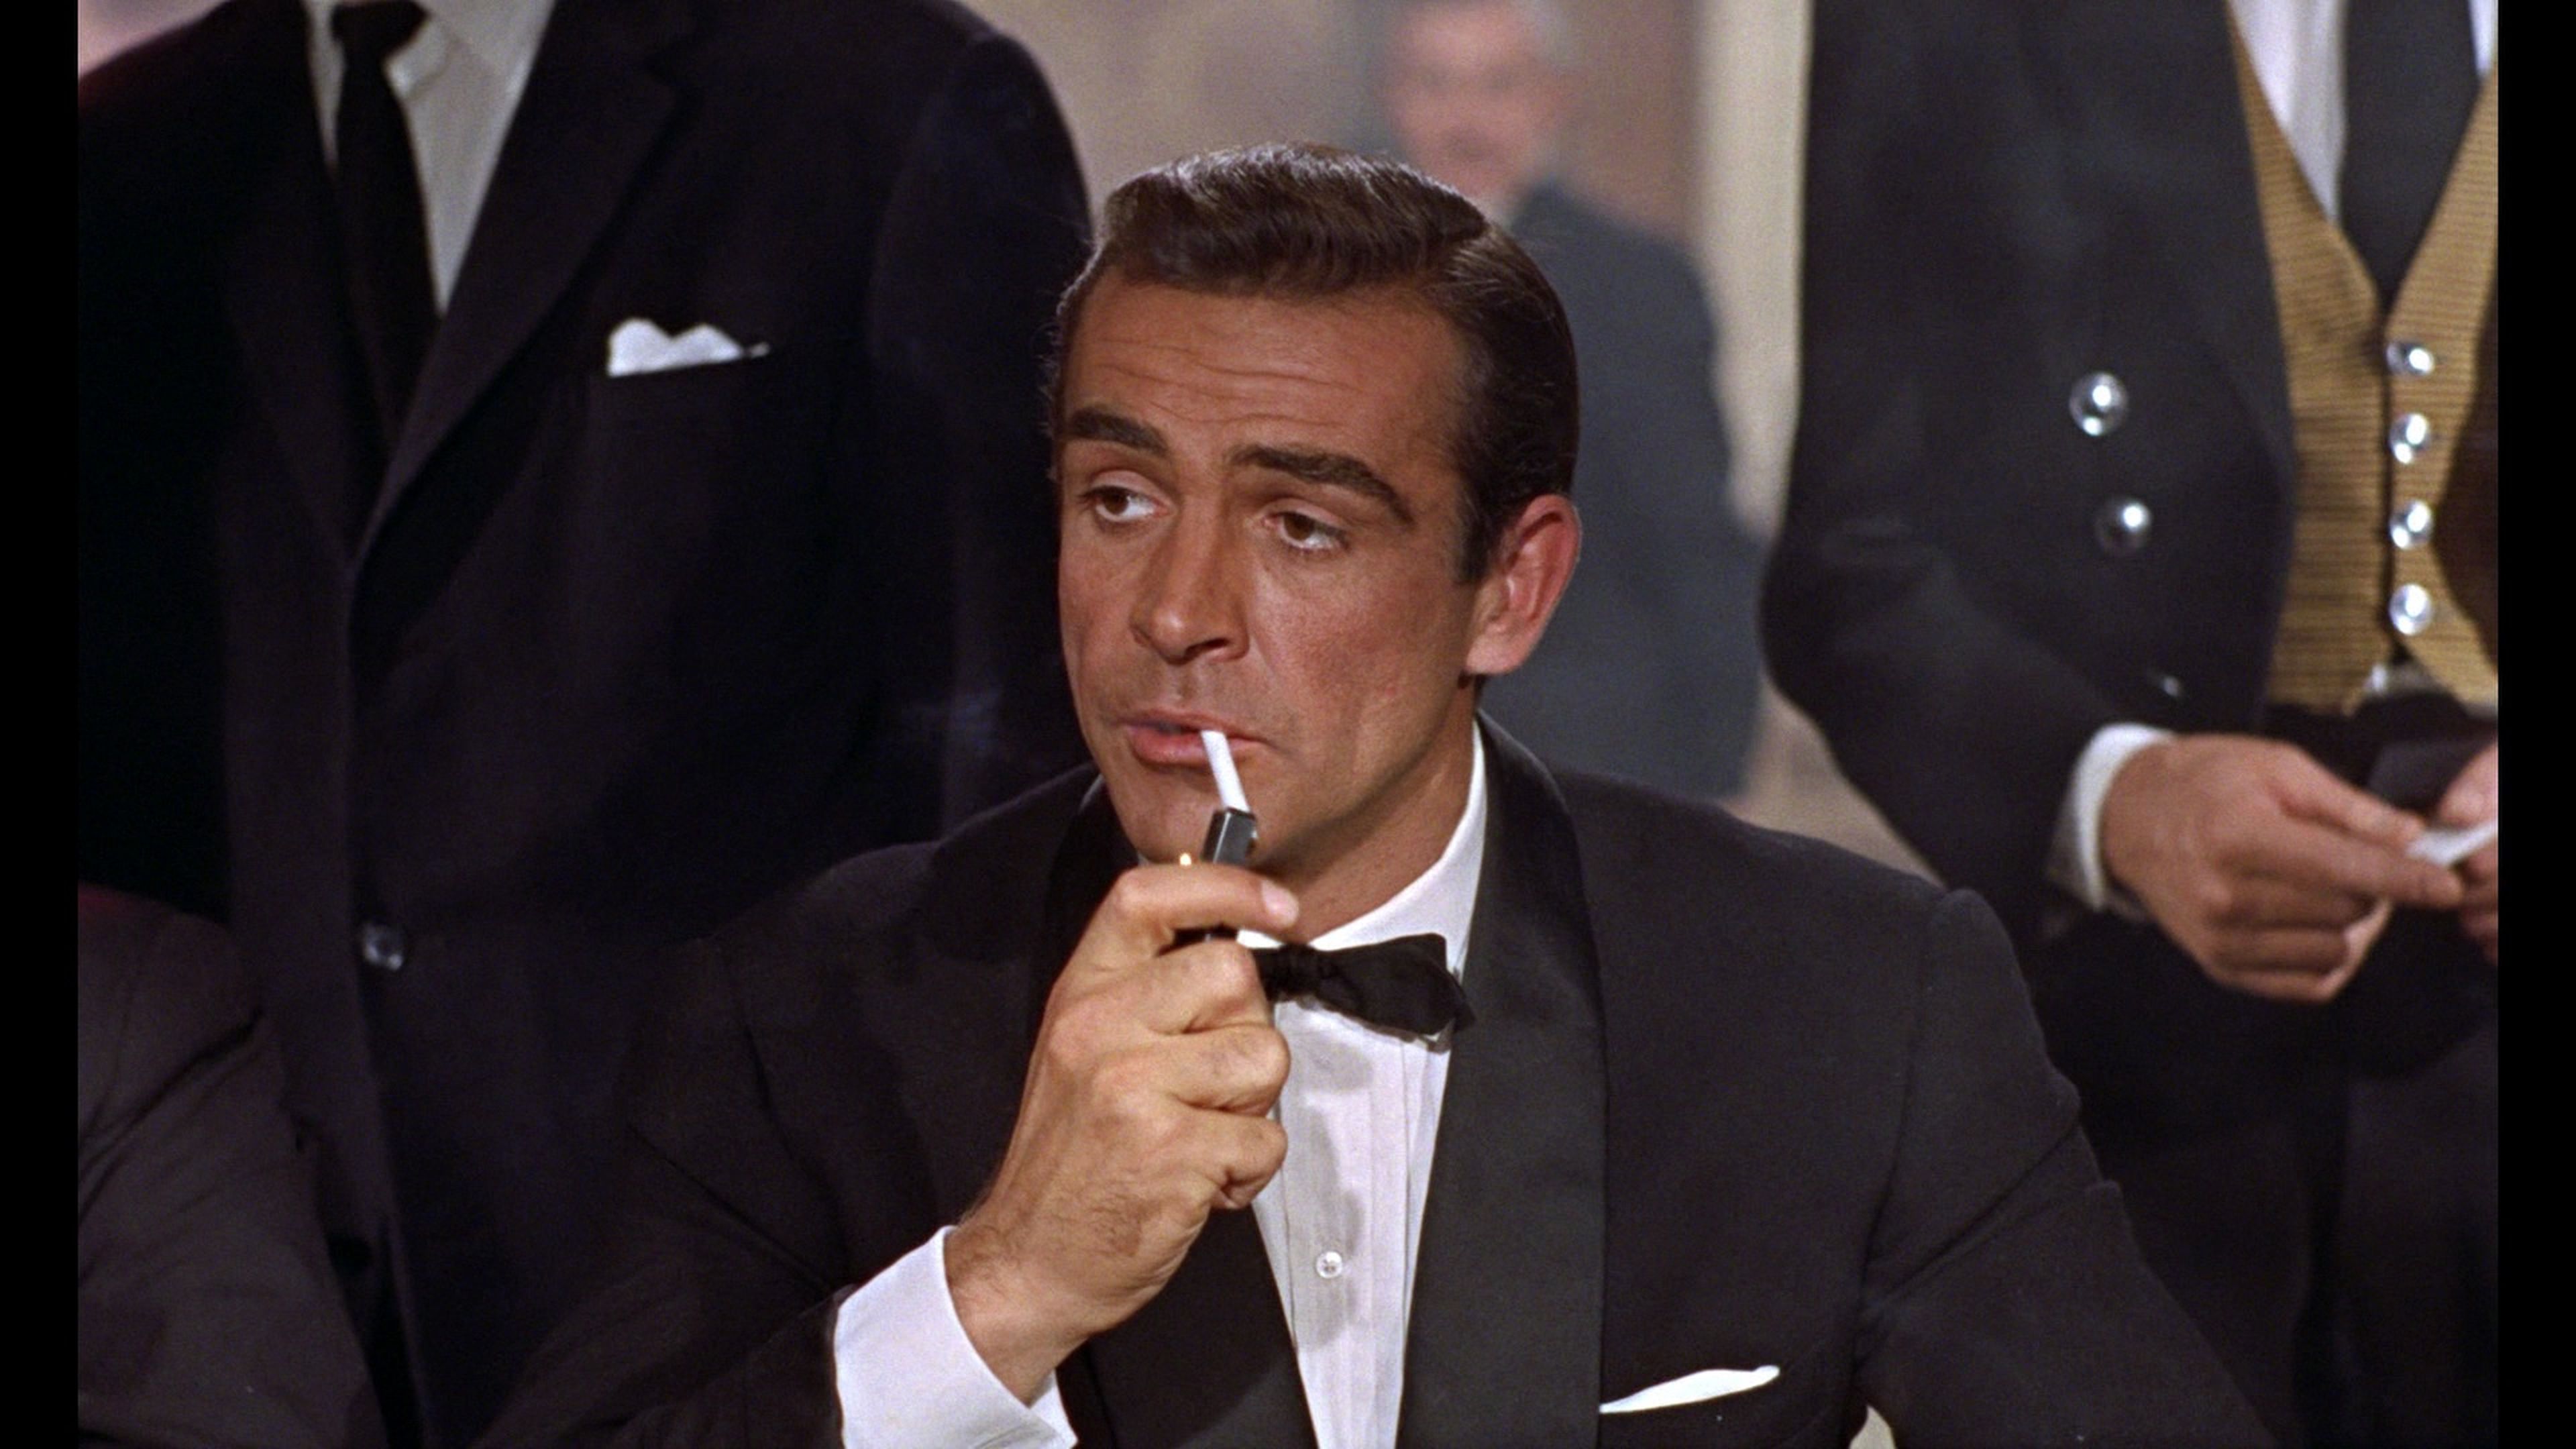 Sean Connery In The Original 'James Bond' Film.